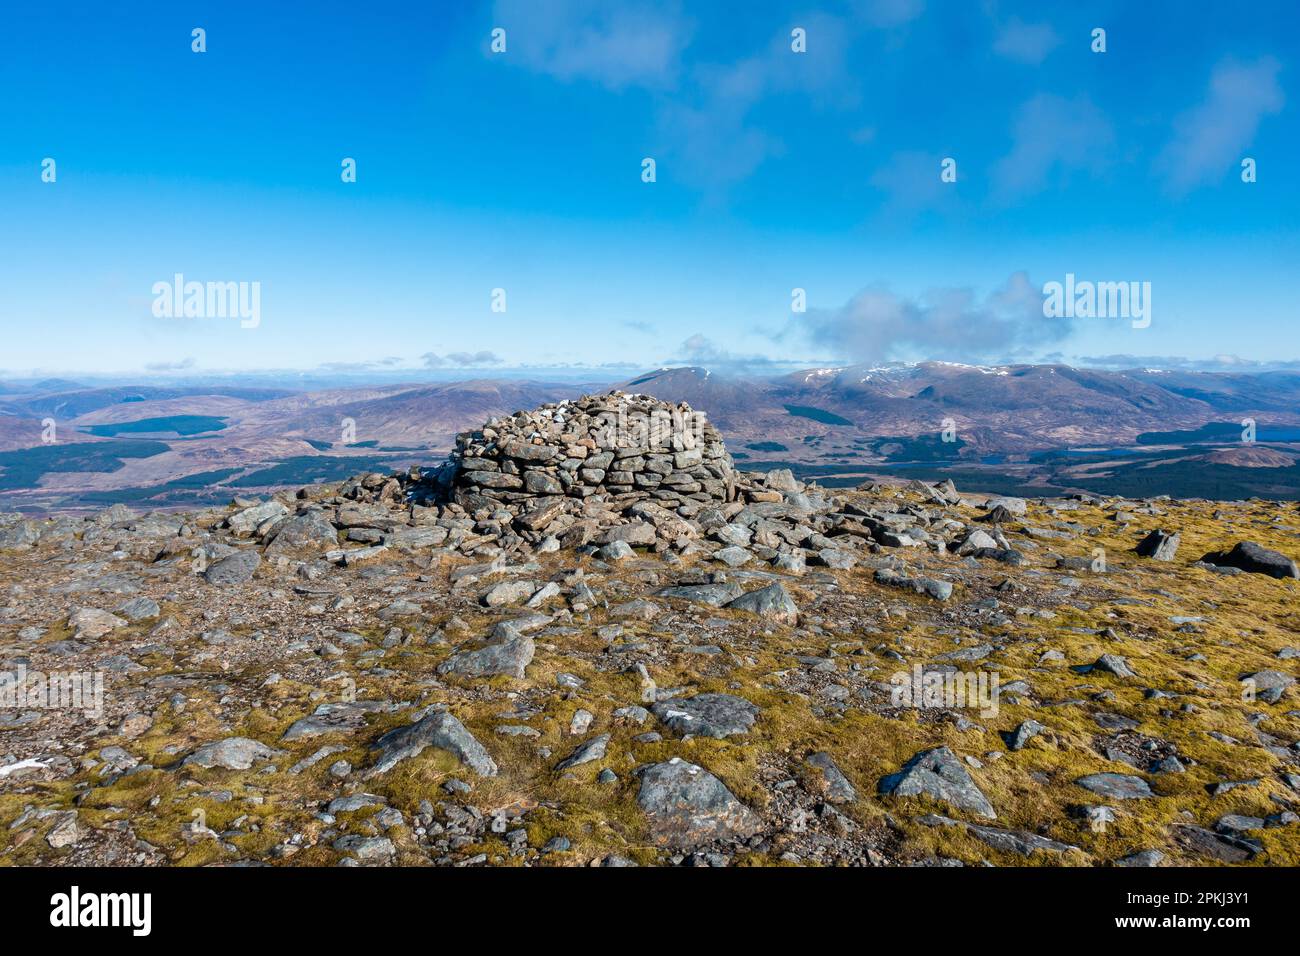 The summit cairn of the Scottish Munro Mountain of Chno Dearg near Spean Bridge, Scotland Stock Photo